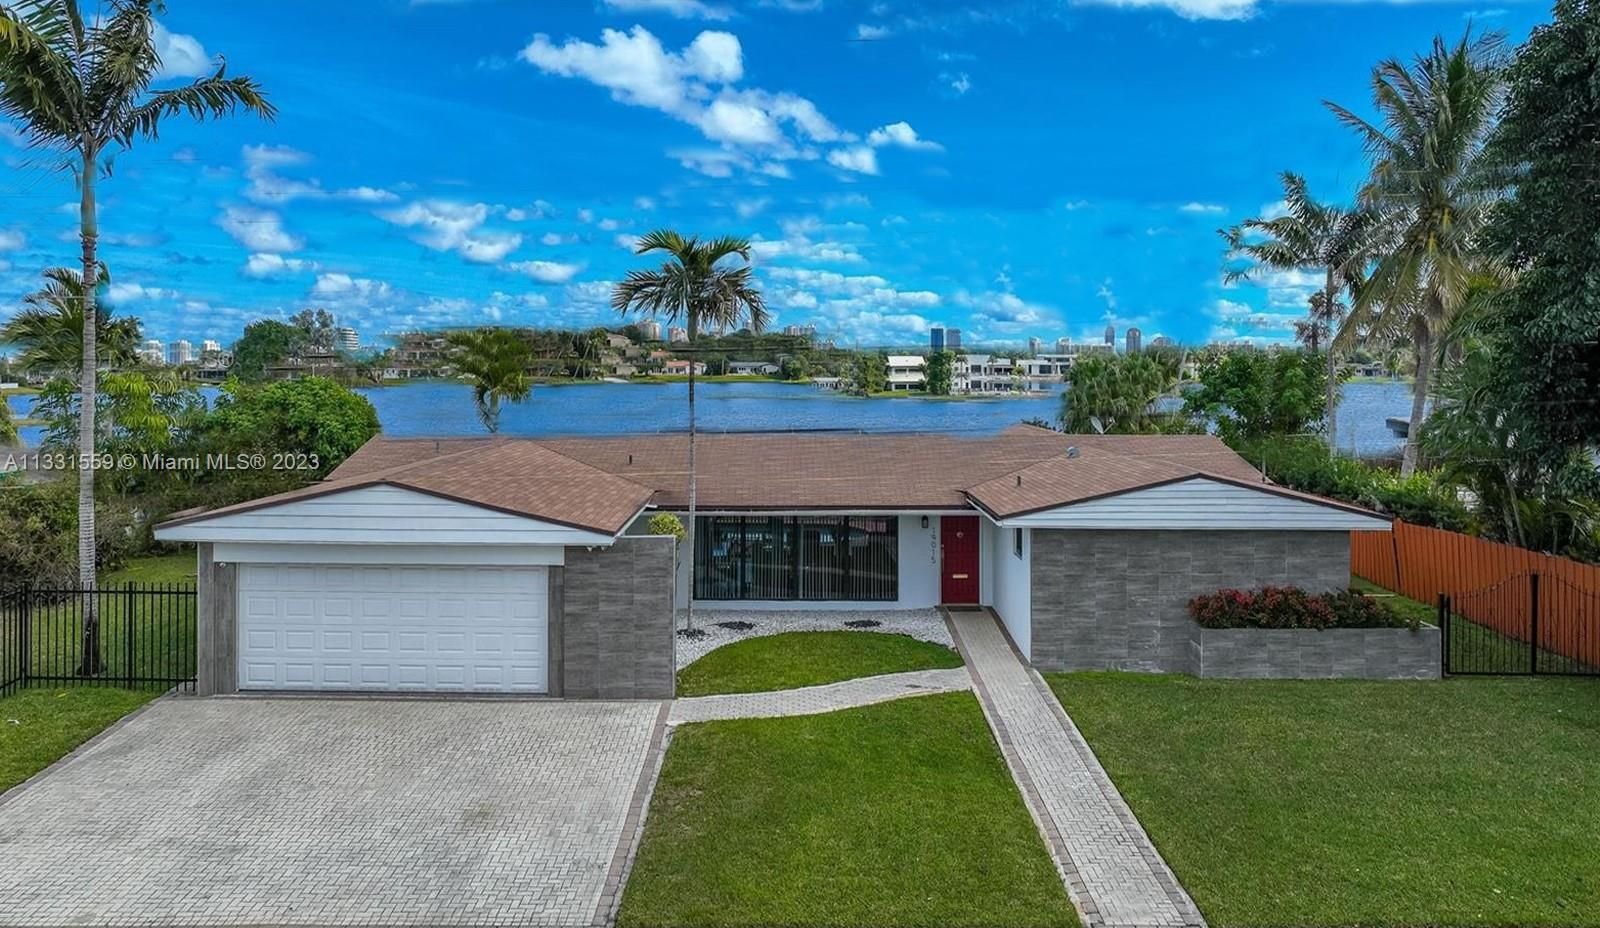 Real estate property located at 19015 18th Ave, Miami-Dade County, Miami, FL